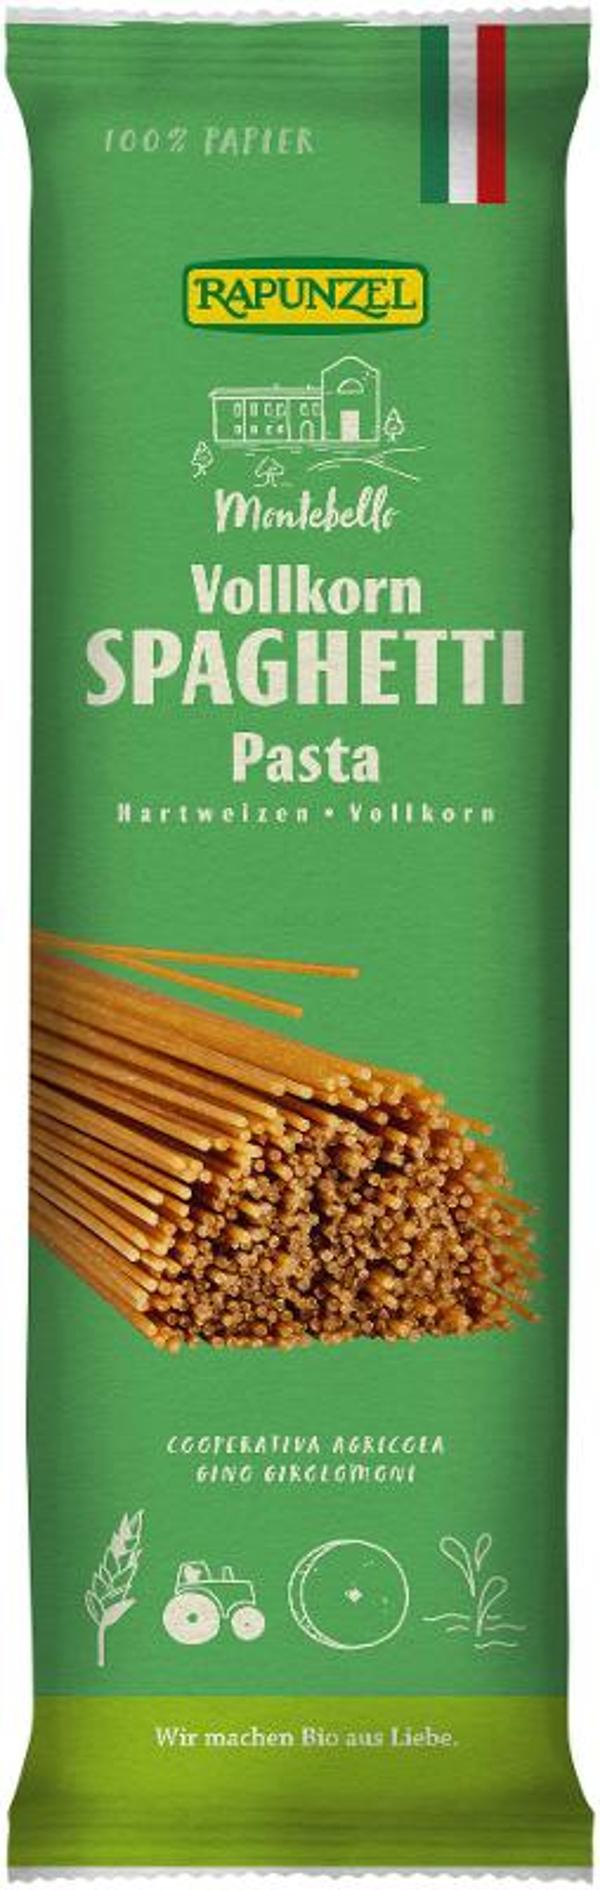 Produktfoto zu Rapunzel Vollkorn Spaghetti - 500g